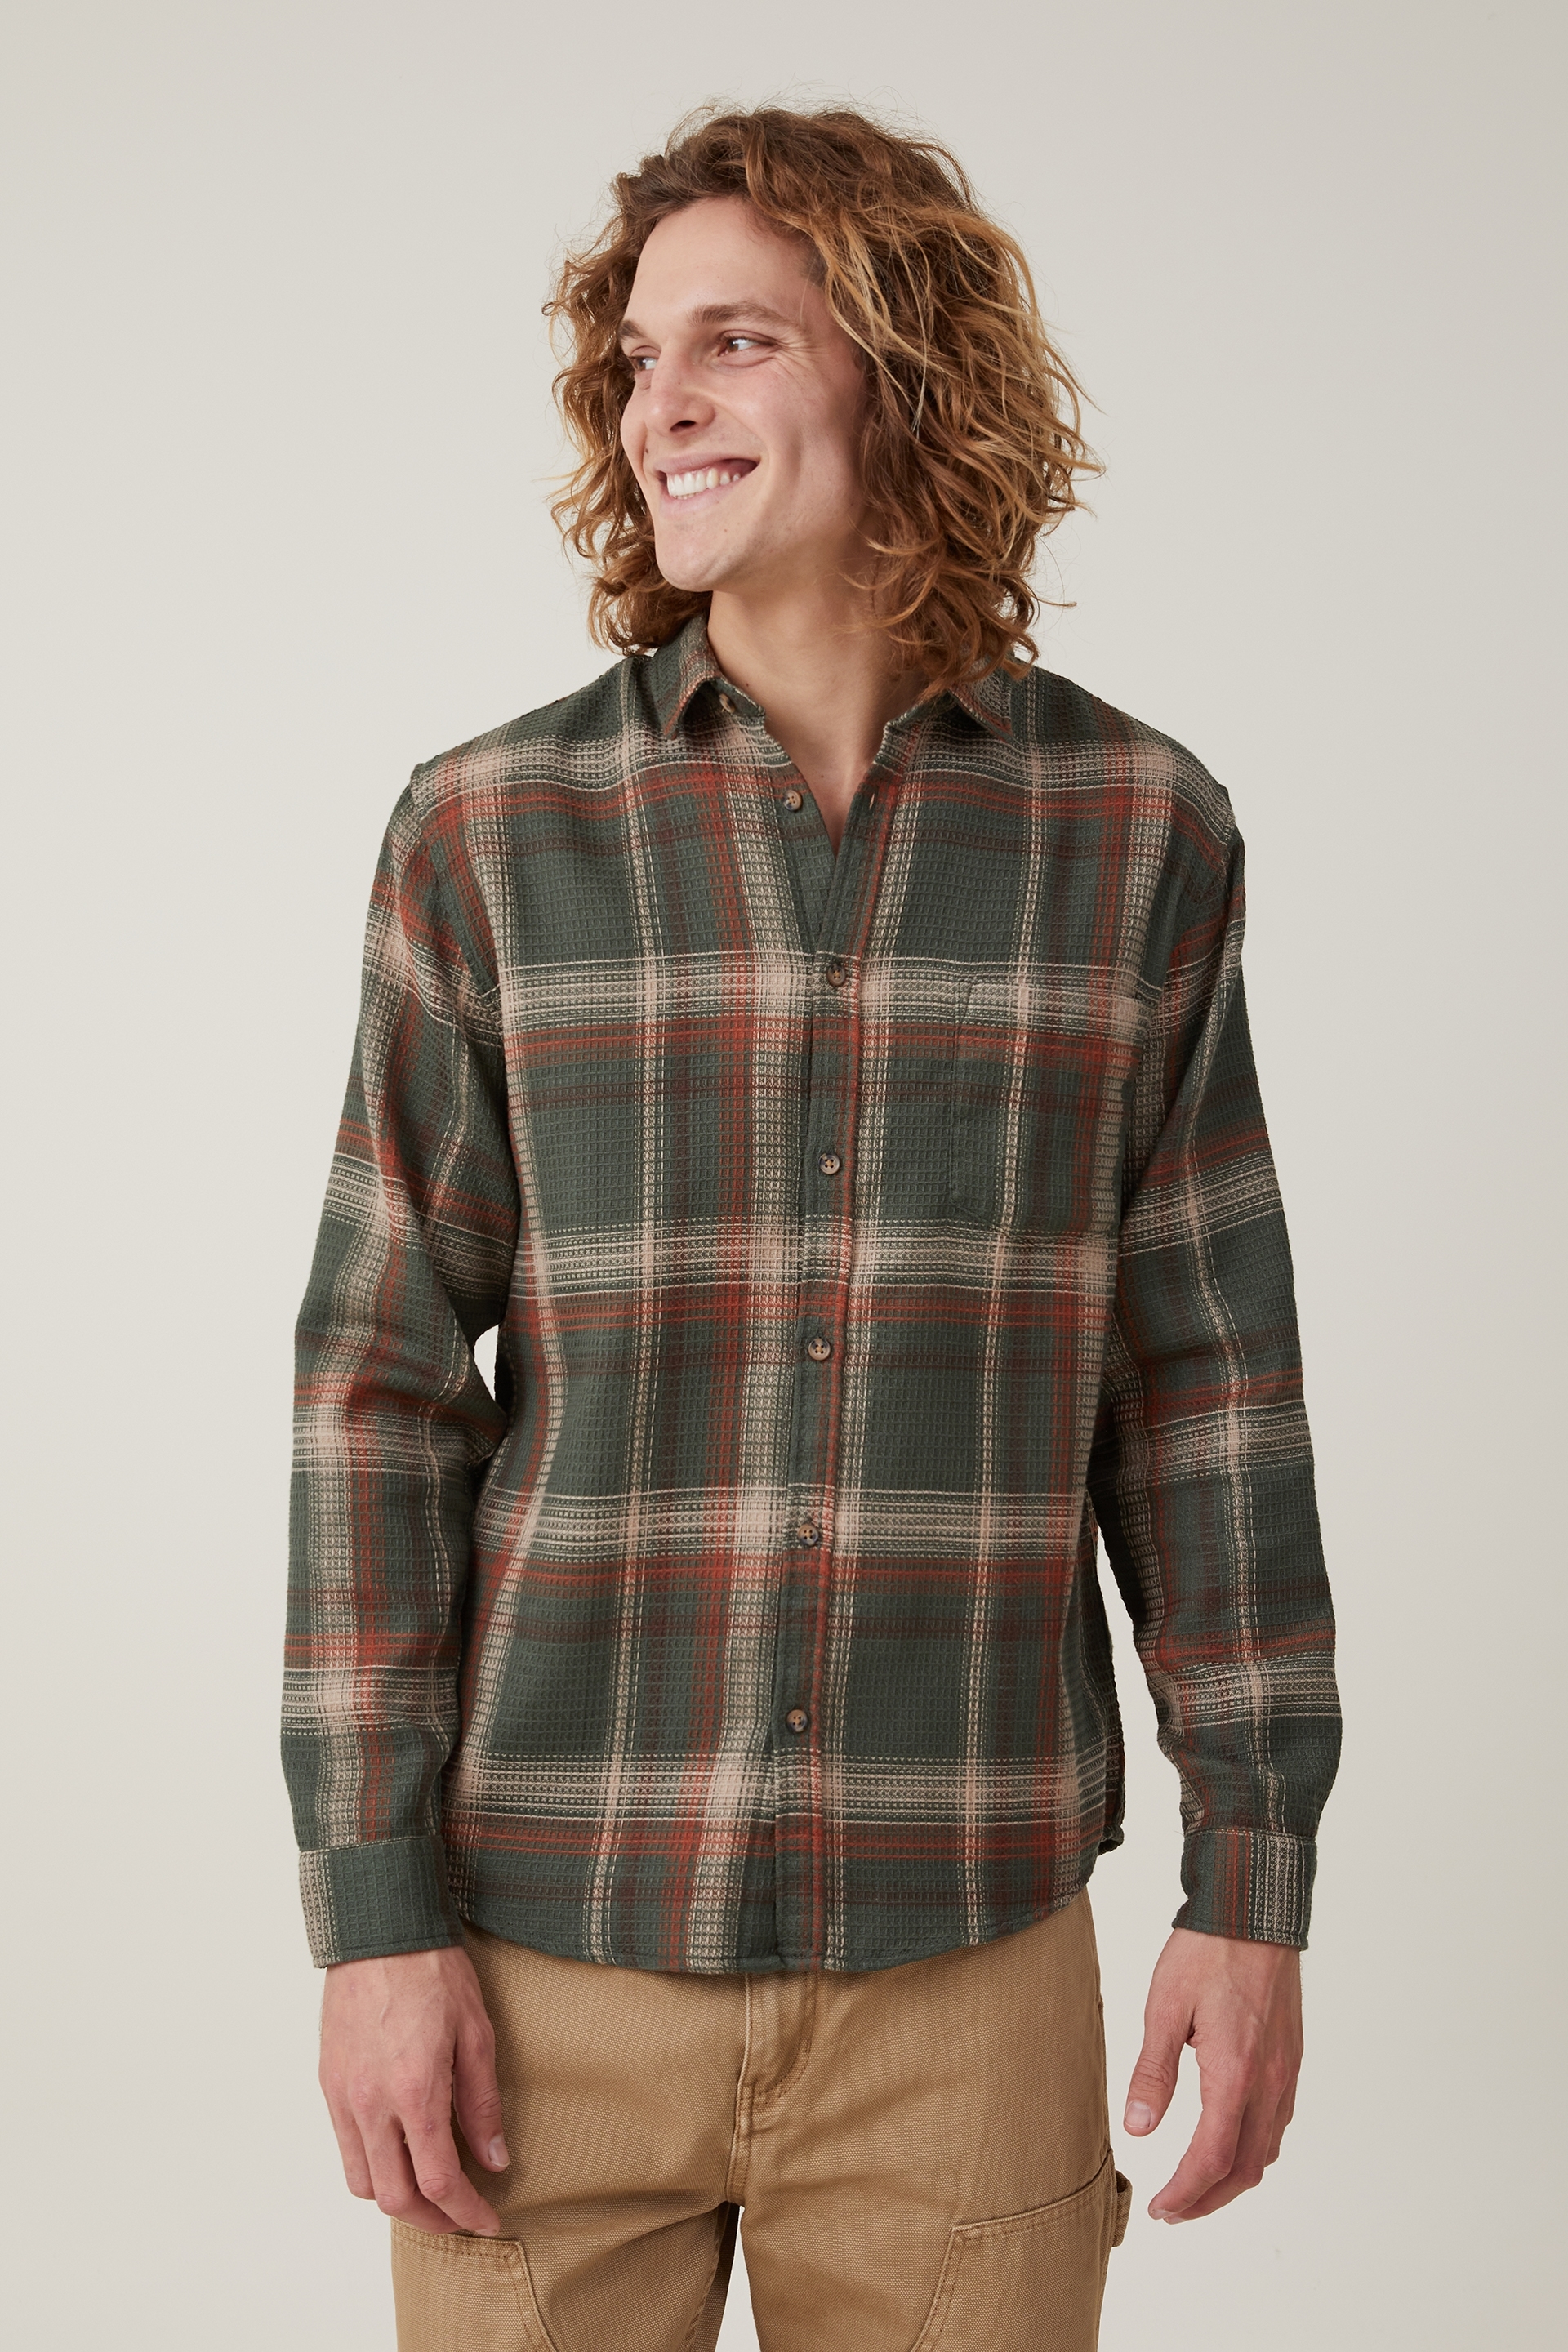 Cotton On Men - Boston Long Sleeve Shirt - Olive waffle check